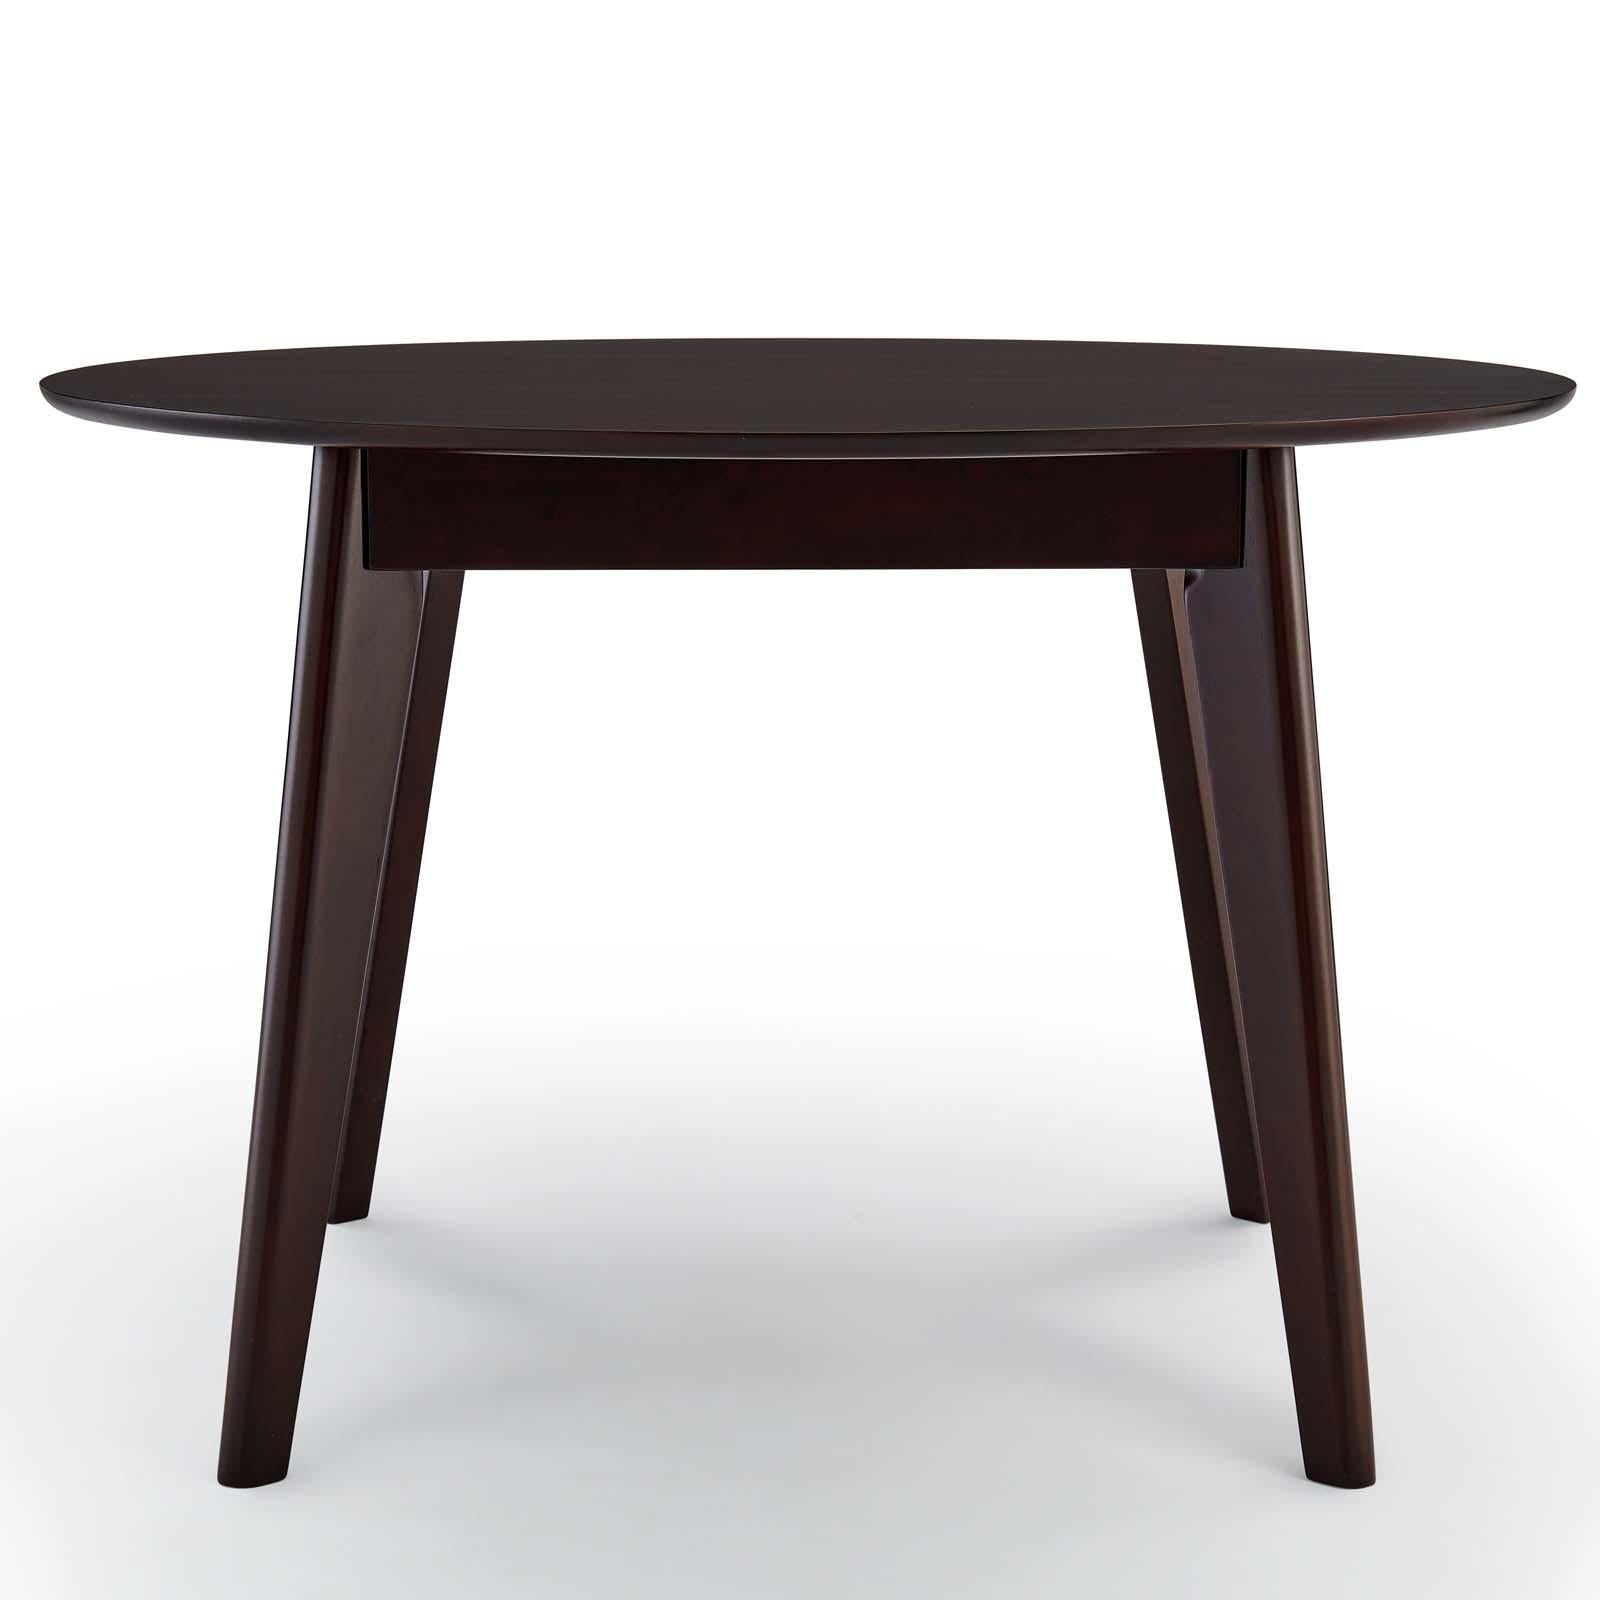 Modway Furniture Modern Prosper 5 Piece Upholstered Velvet Dining Set - EEI-4291